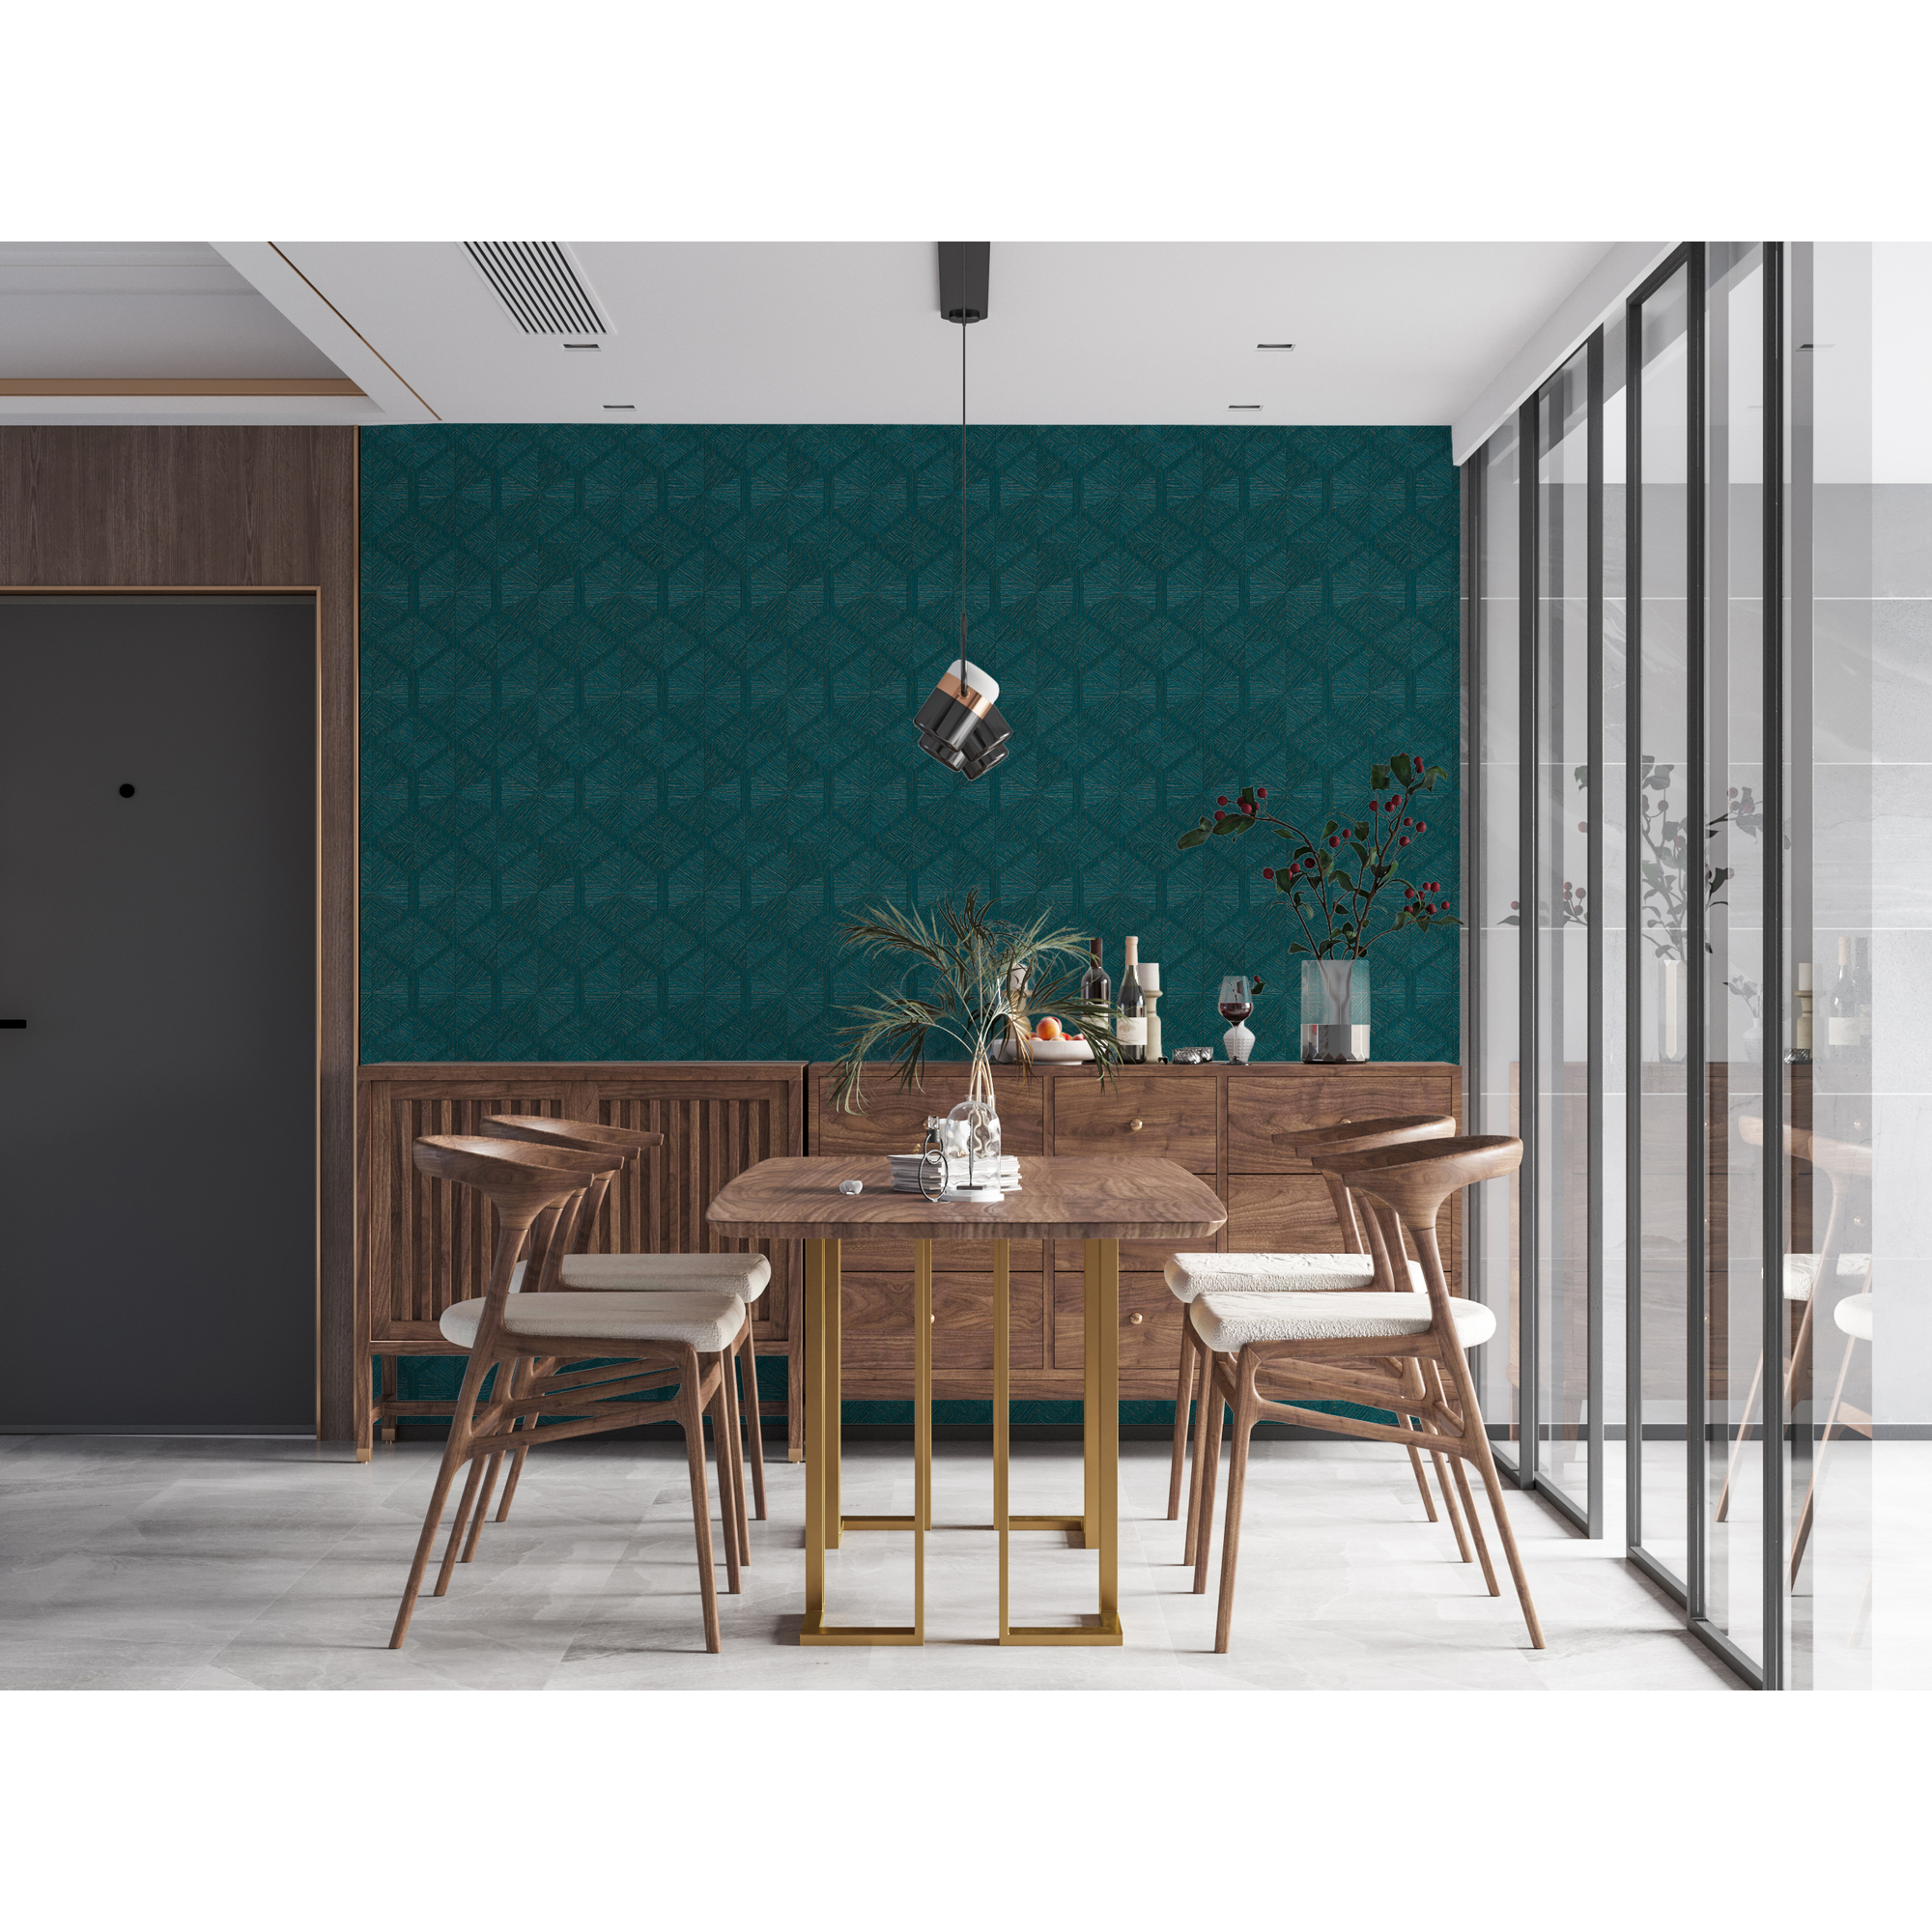 Vliestapete 'My Home. My Spa.' Dreiecke türkis 10,05 x 0,53 m + product picture